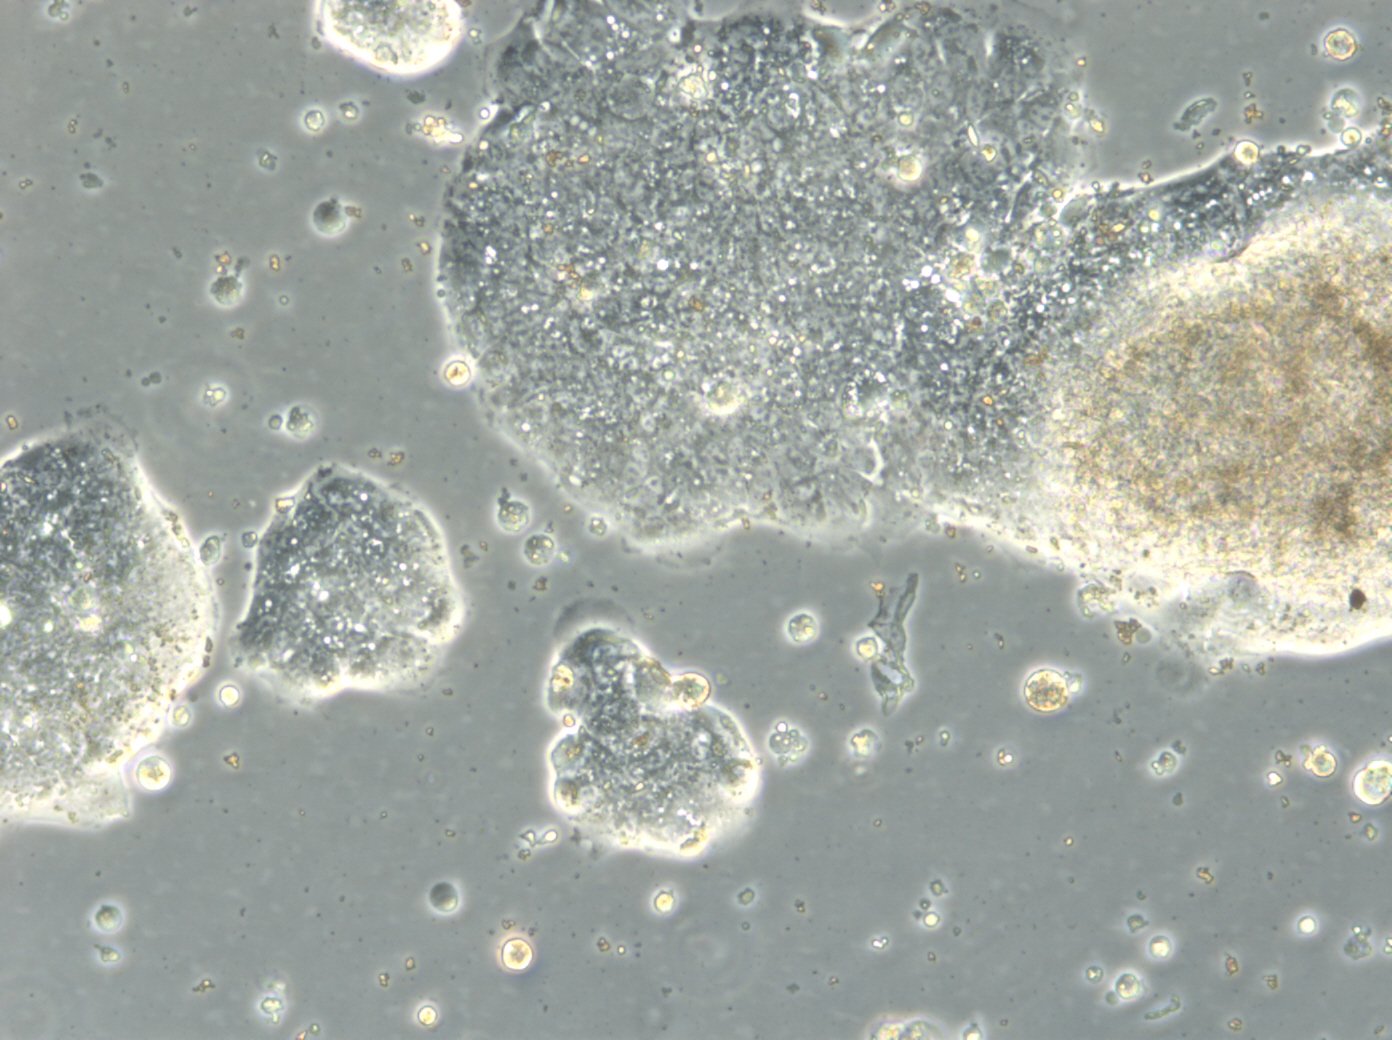 HROC357 Cells